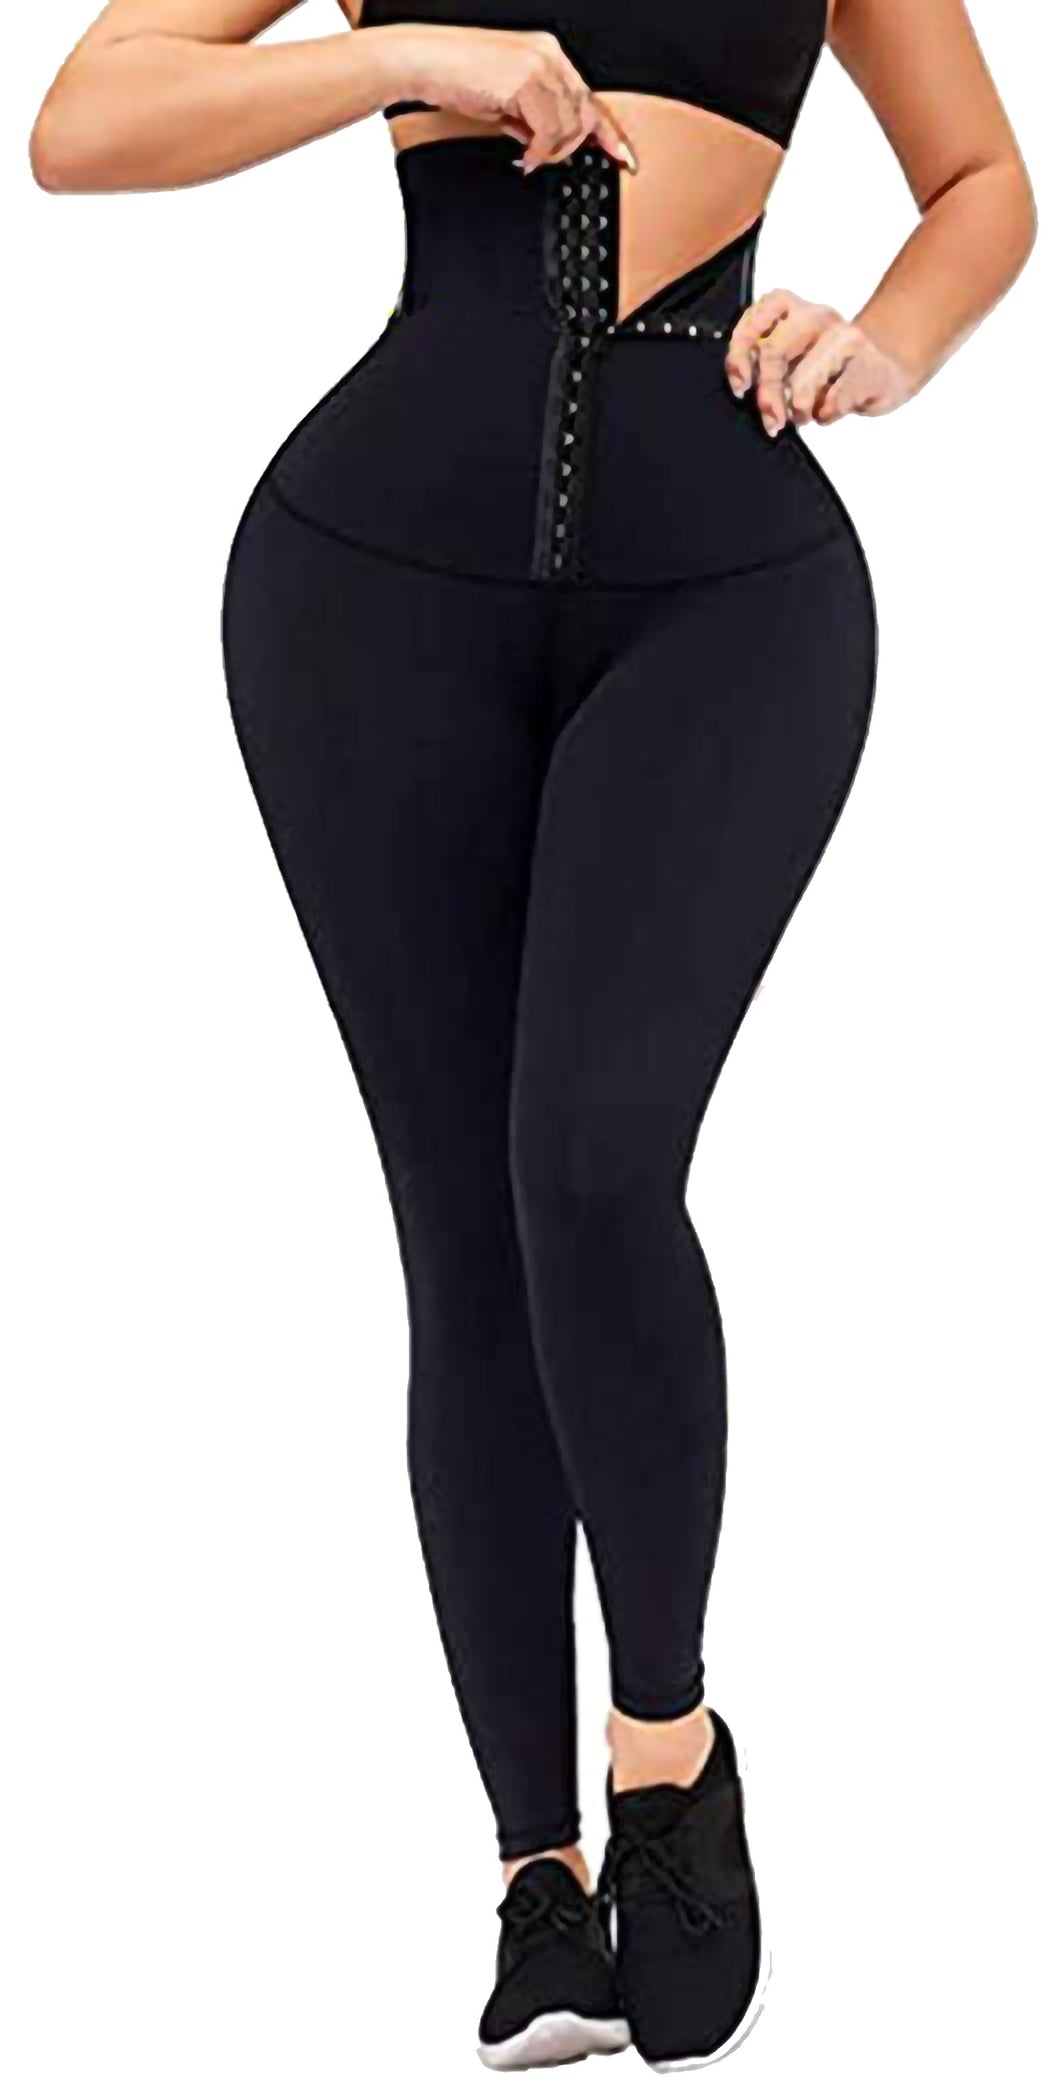 Trifolium Corset Gym Leggings Women High Waisted Slimming Body Shaper Tummy Control Yoga Pants Black